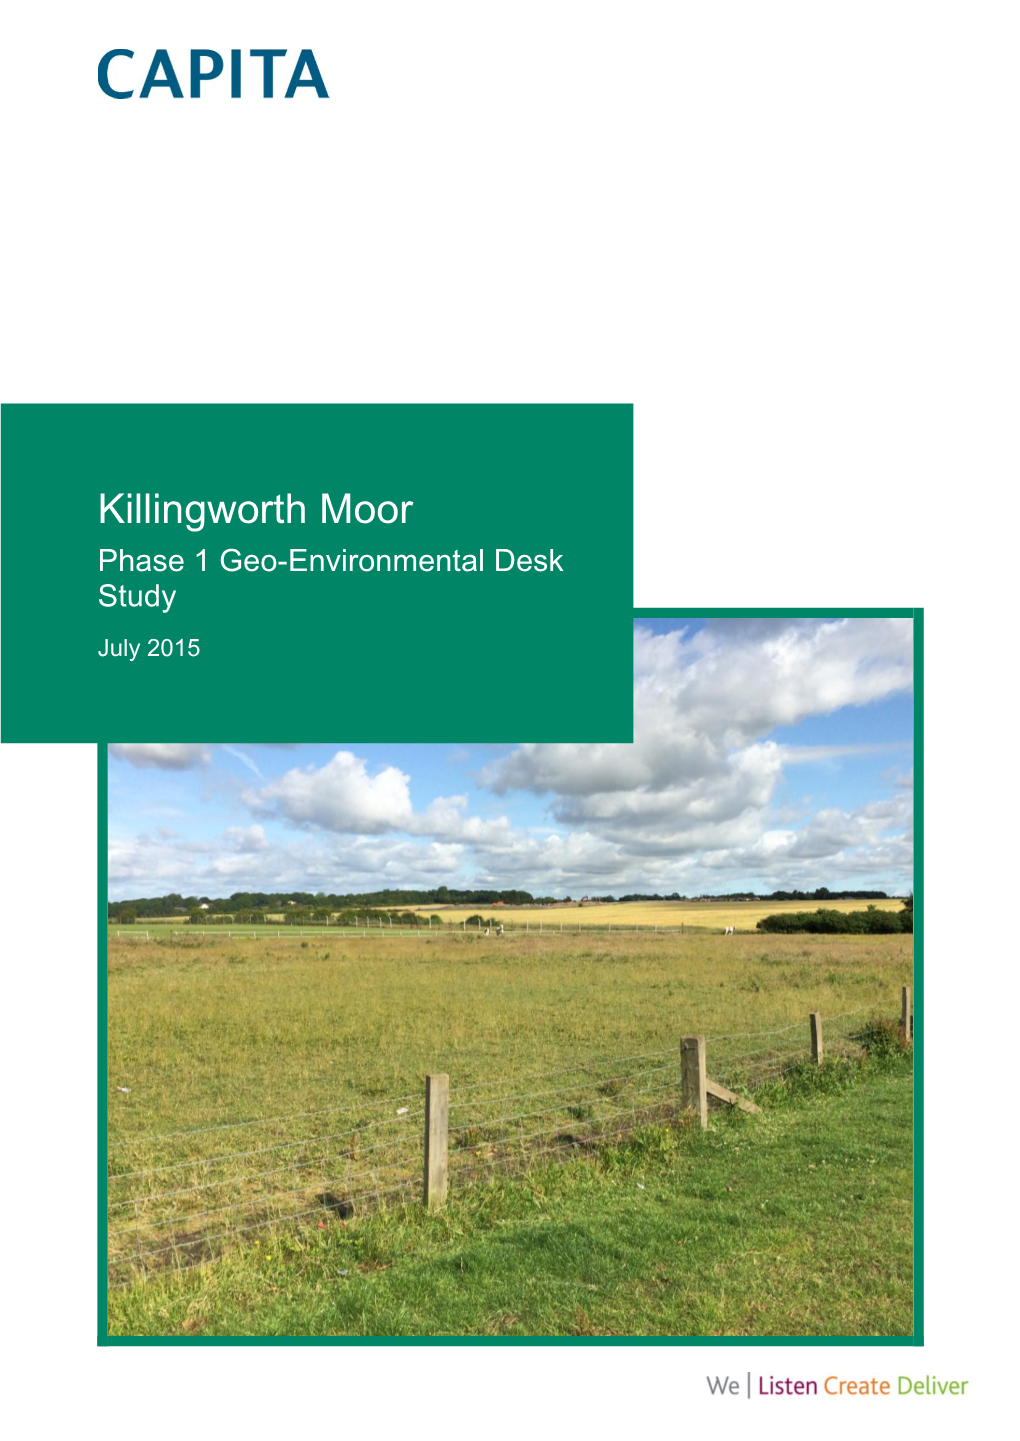 Killingworth Moor Phase 1 Geo-Environmental Desk Study